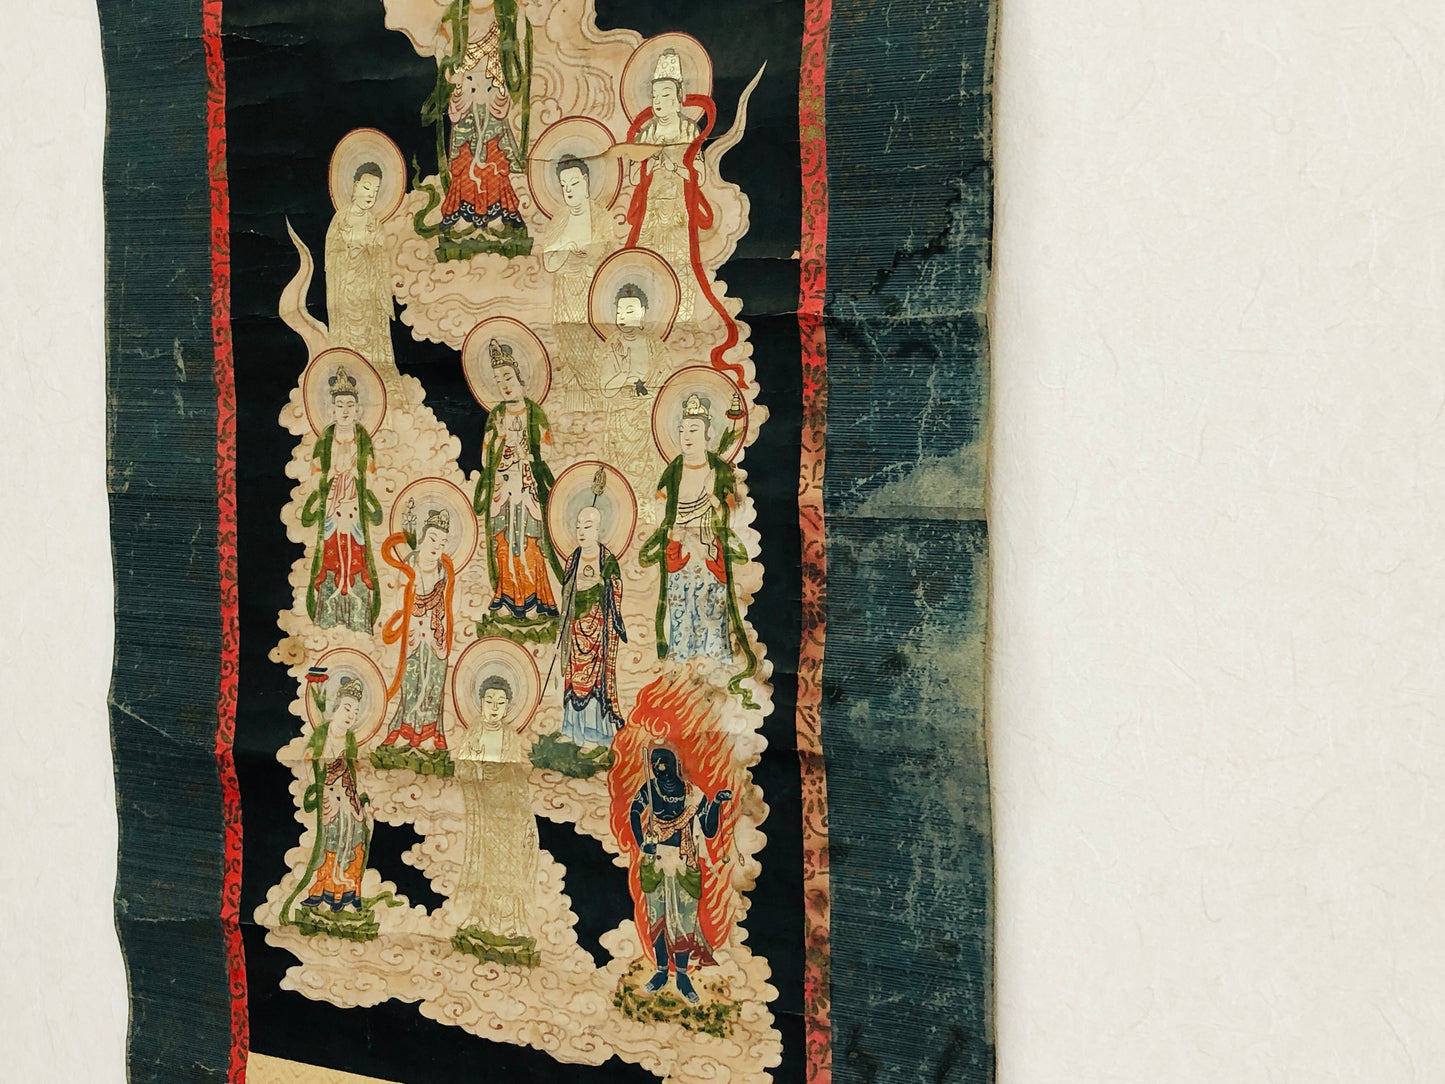 Y5114 KAKEJIKU 13 Buddha paintings Japan hanging scroll interior decor vintage